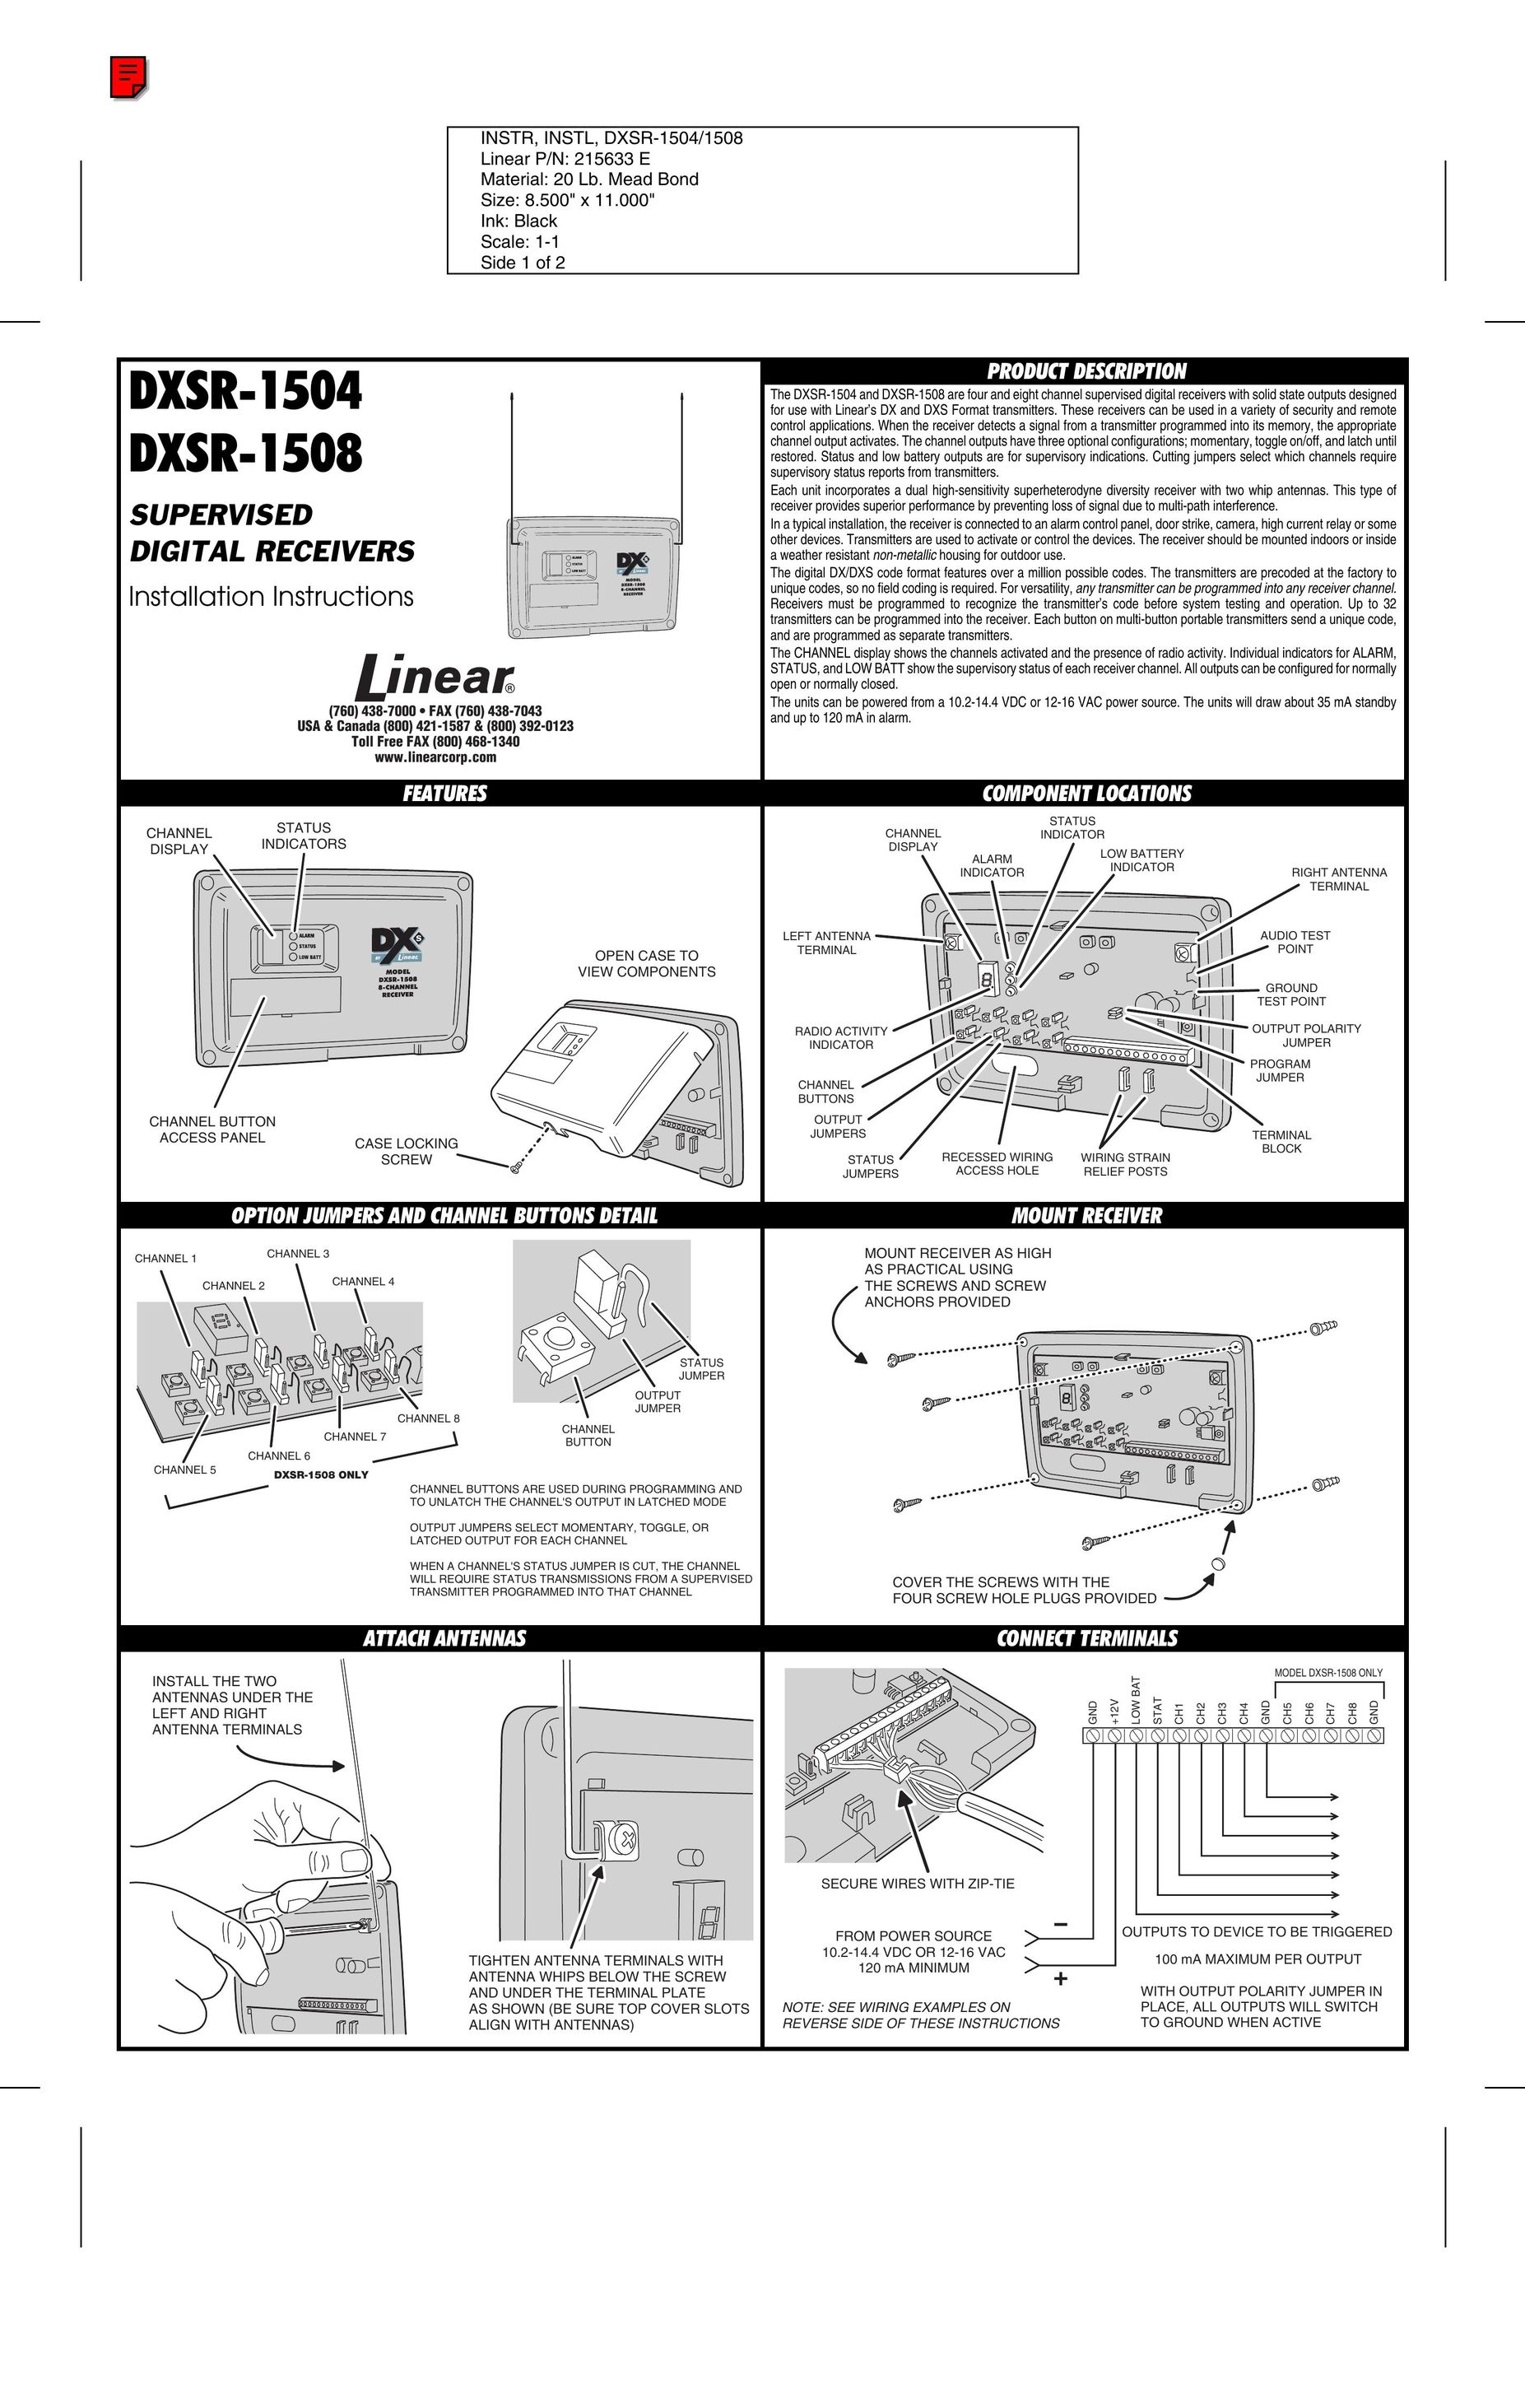 Linear DXSR-1504 Car Satellite TV System User Manual